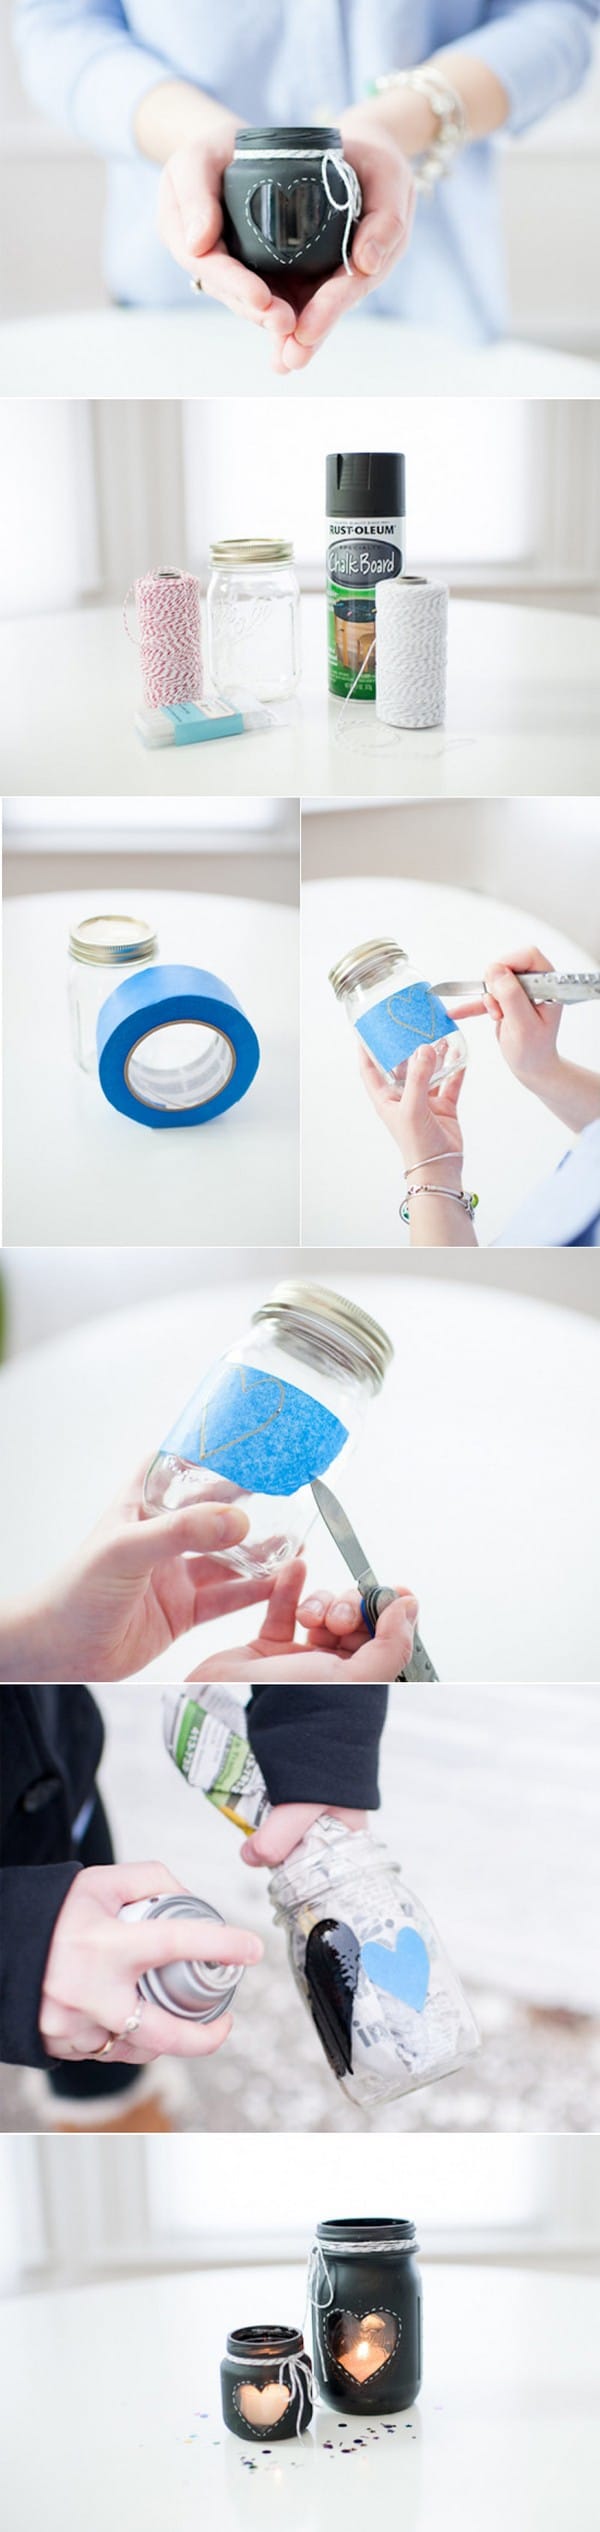 DIY love heart manson jar candle holder wedding centerpieces